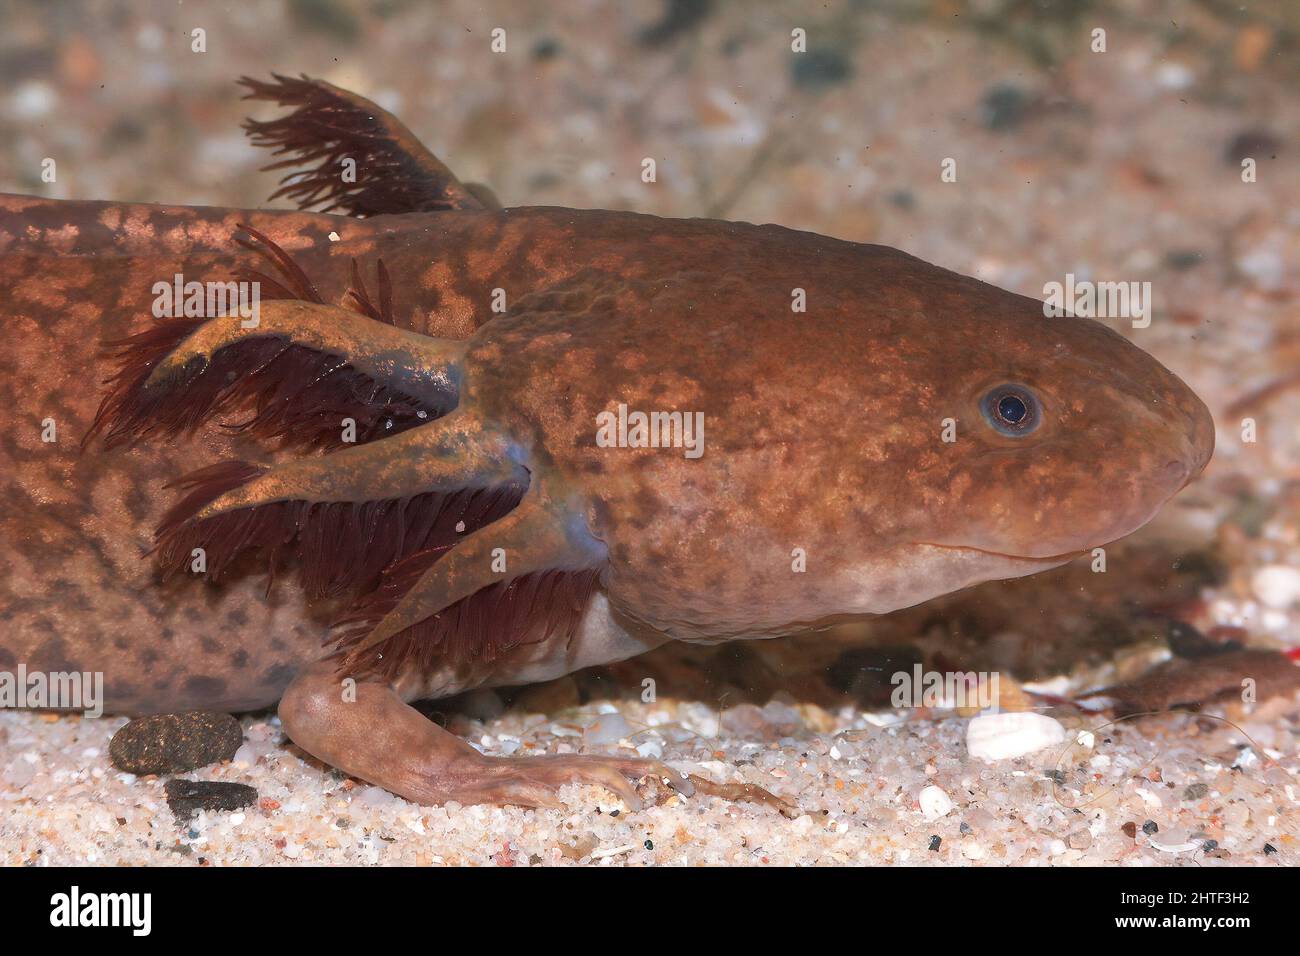 Closeup on an endangered, aquatic brown Axolotl, Ambystoma mexicanum Stock Photo